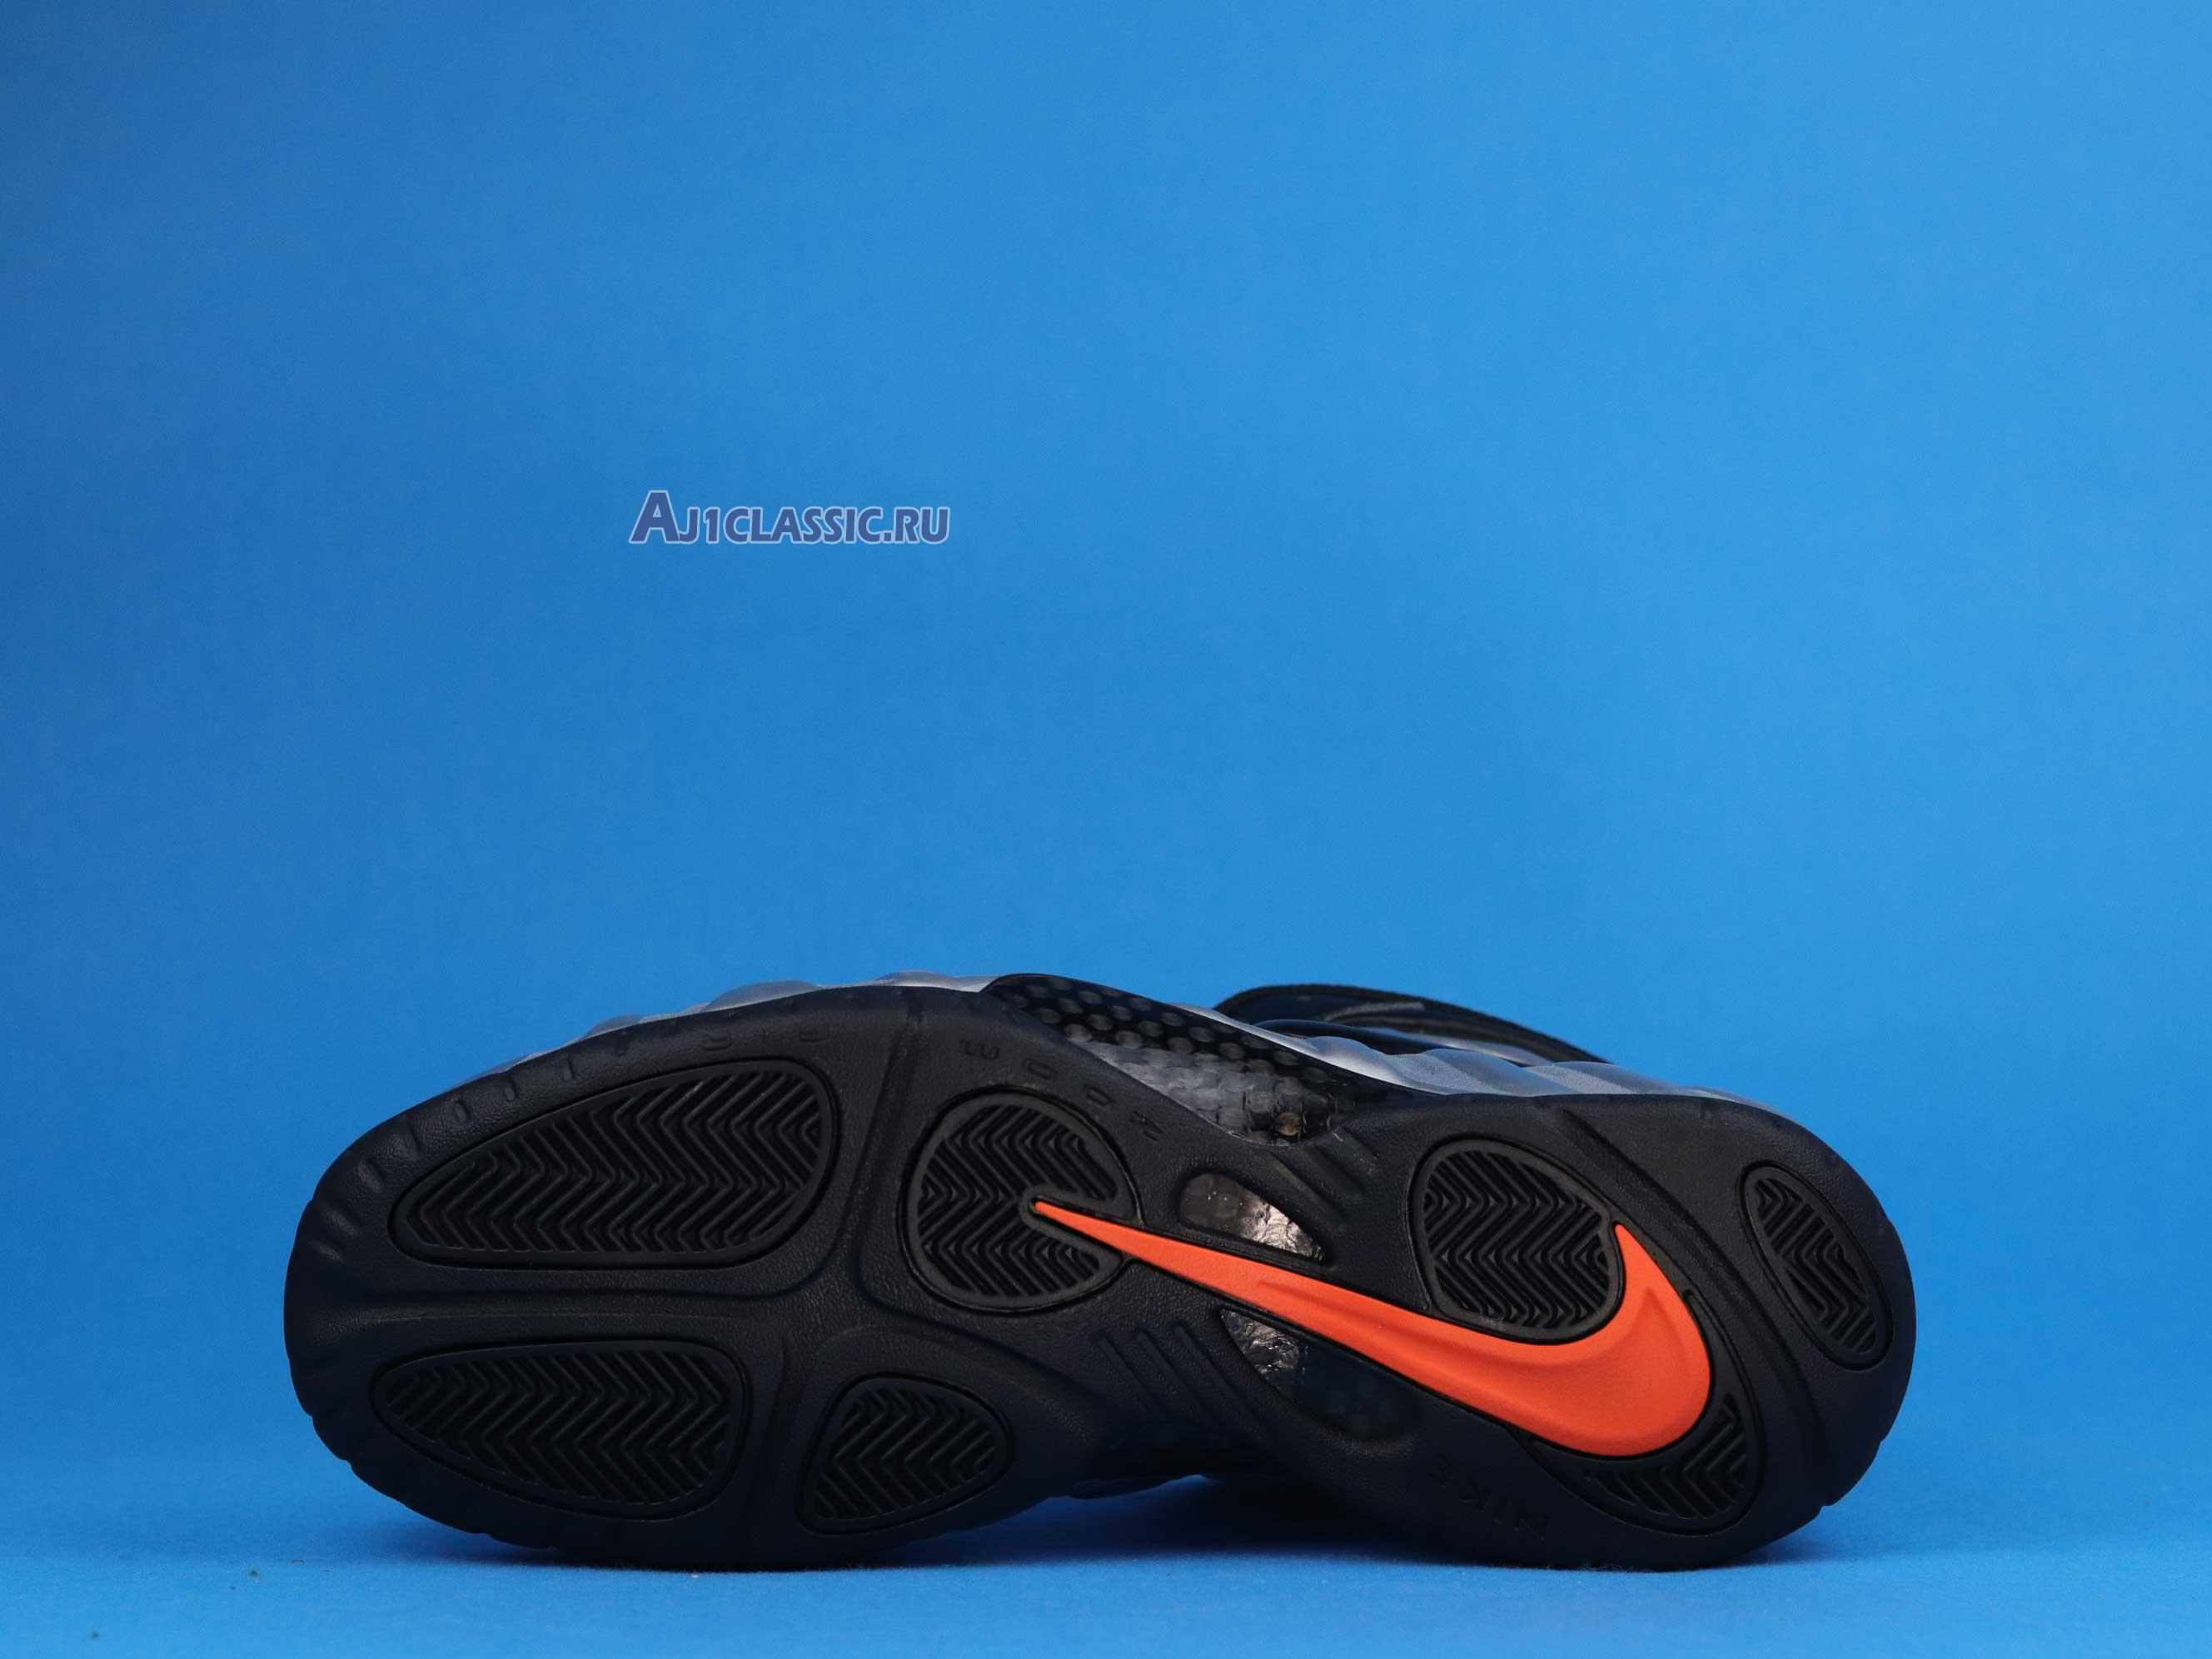 Nike Air Foamposite Pro "Halloween" CT2286-001